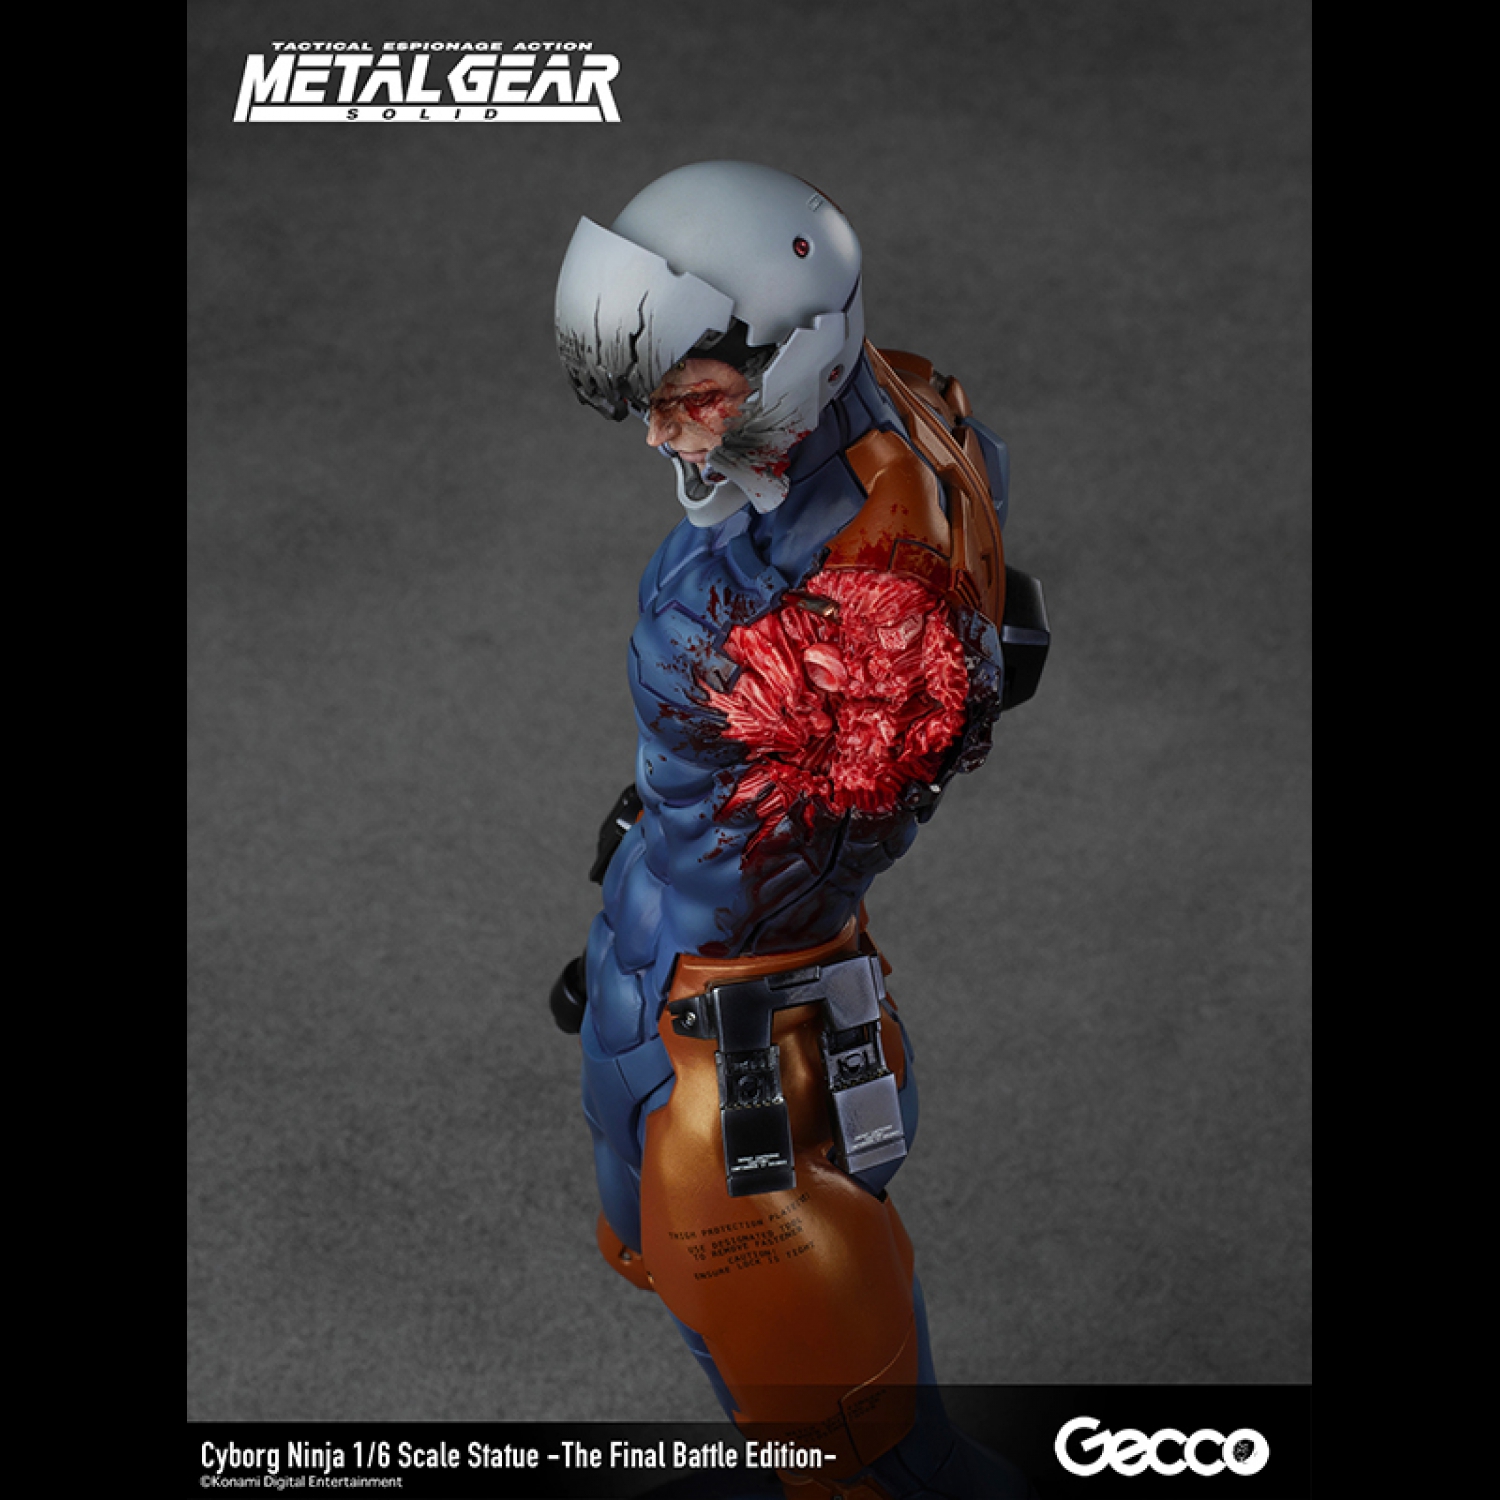 METAL GEAR SOLID Cyborg Ninja -The Final Battle Edition- 1/6 Scale Statue